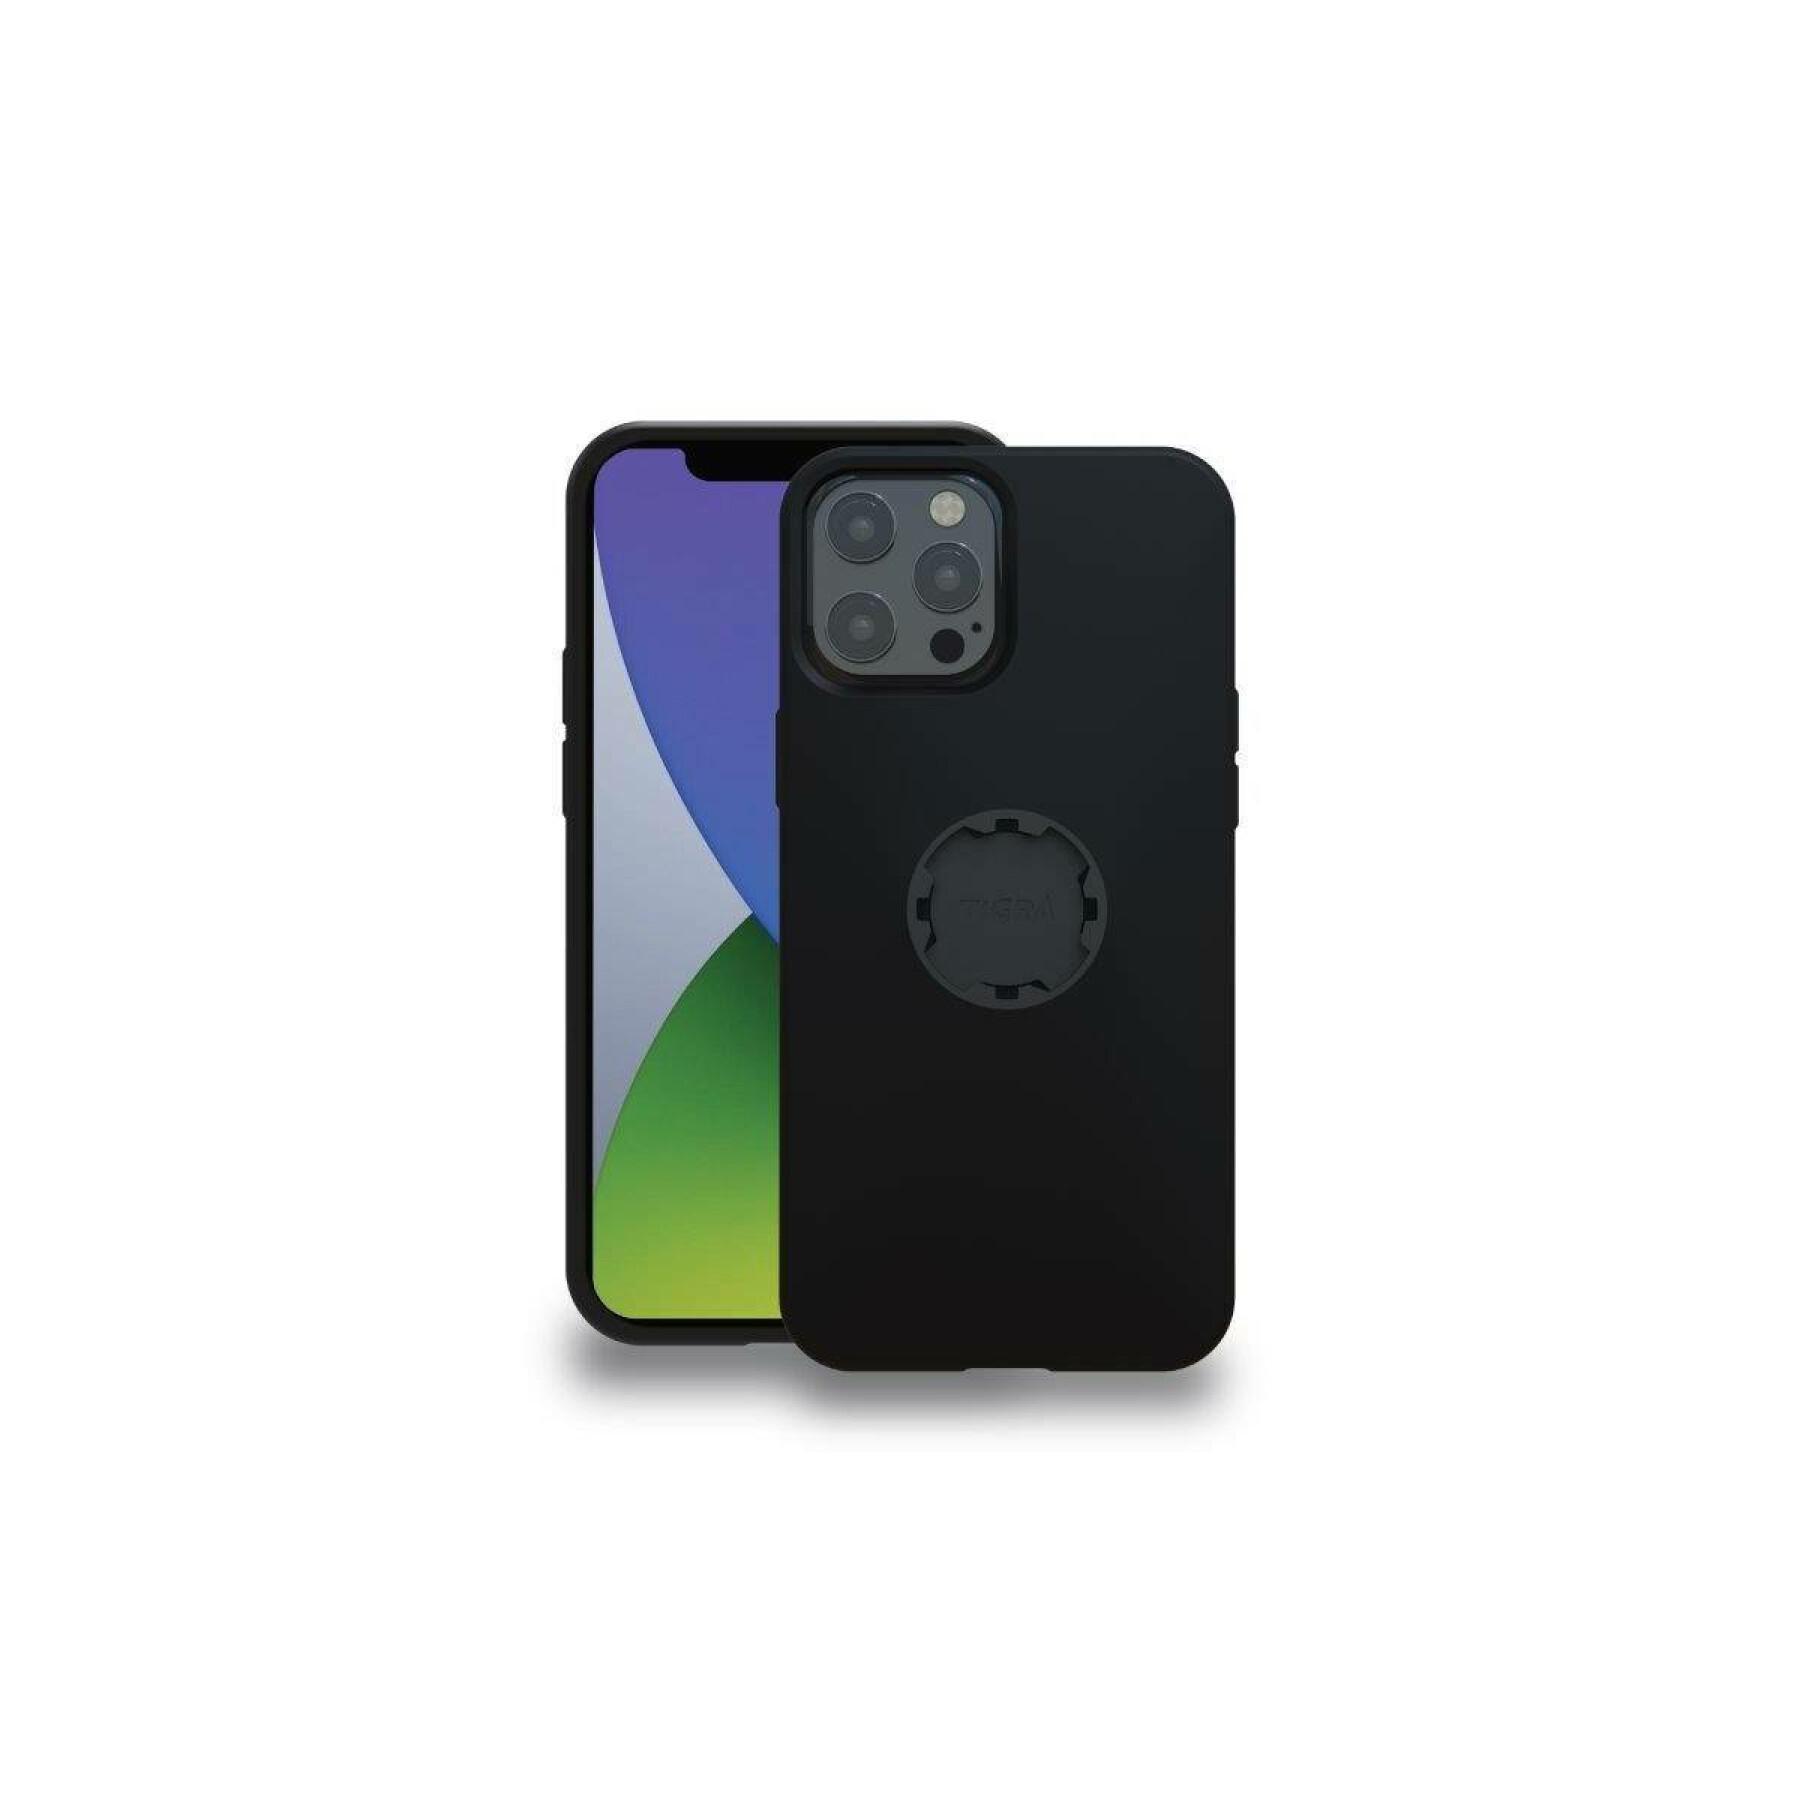 Smartphone hoesje Tigra Mountcase Fit-Clic Iphone 12 Pro Max